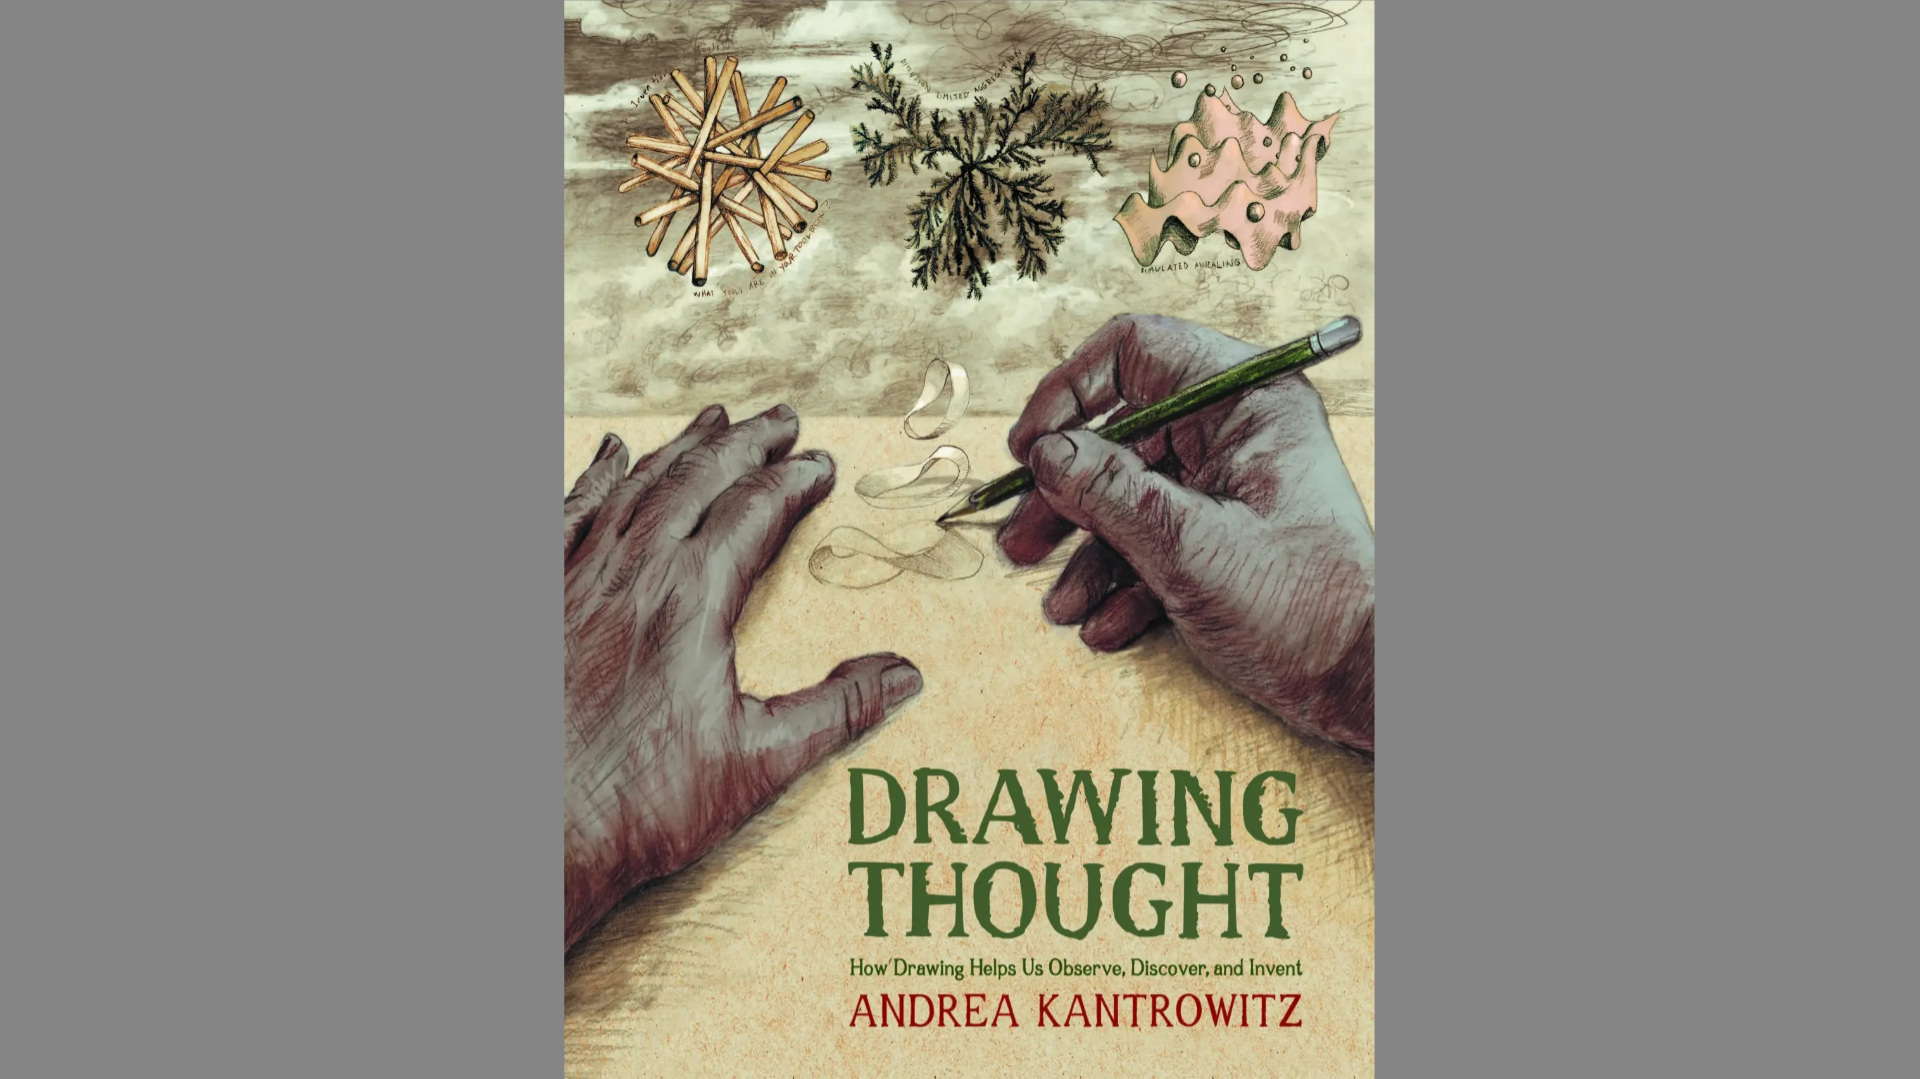 Fredrickson Family Innovation Lab: Andrea Kantrowitz – “Exploring Cognitive Psychology: Human Imagination, Art, and Perception”